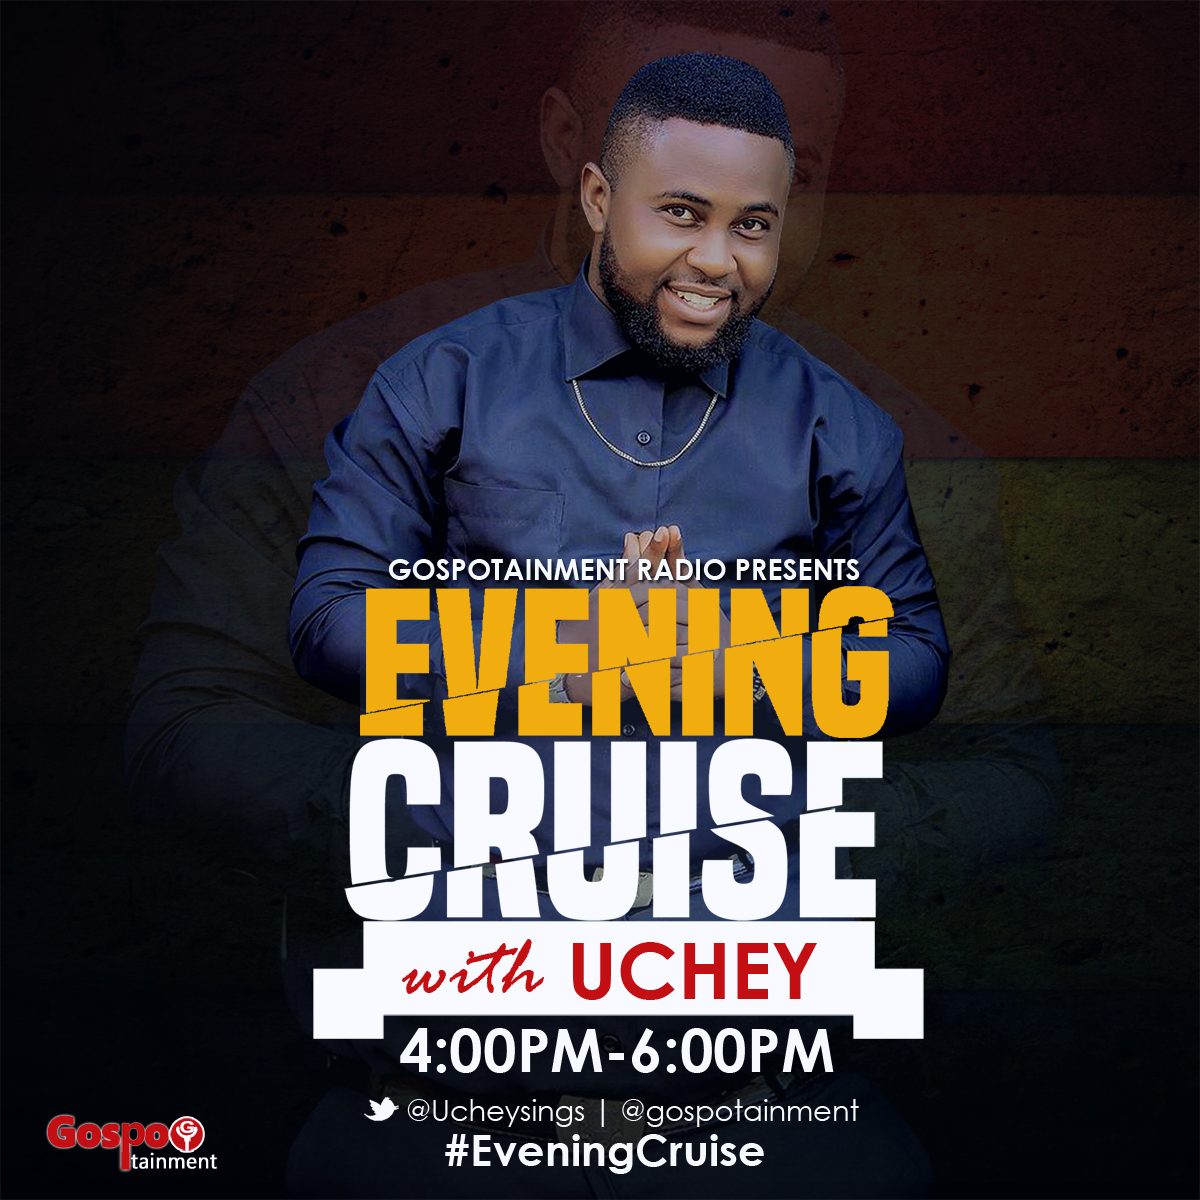 Evening Cruise with Uchey 4